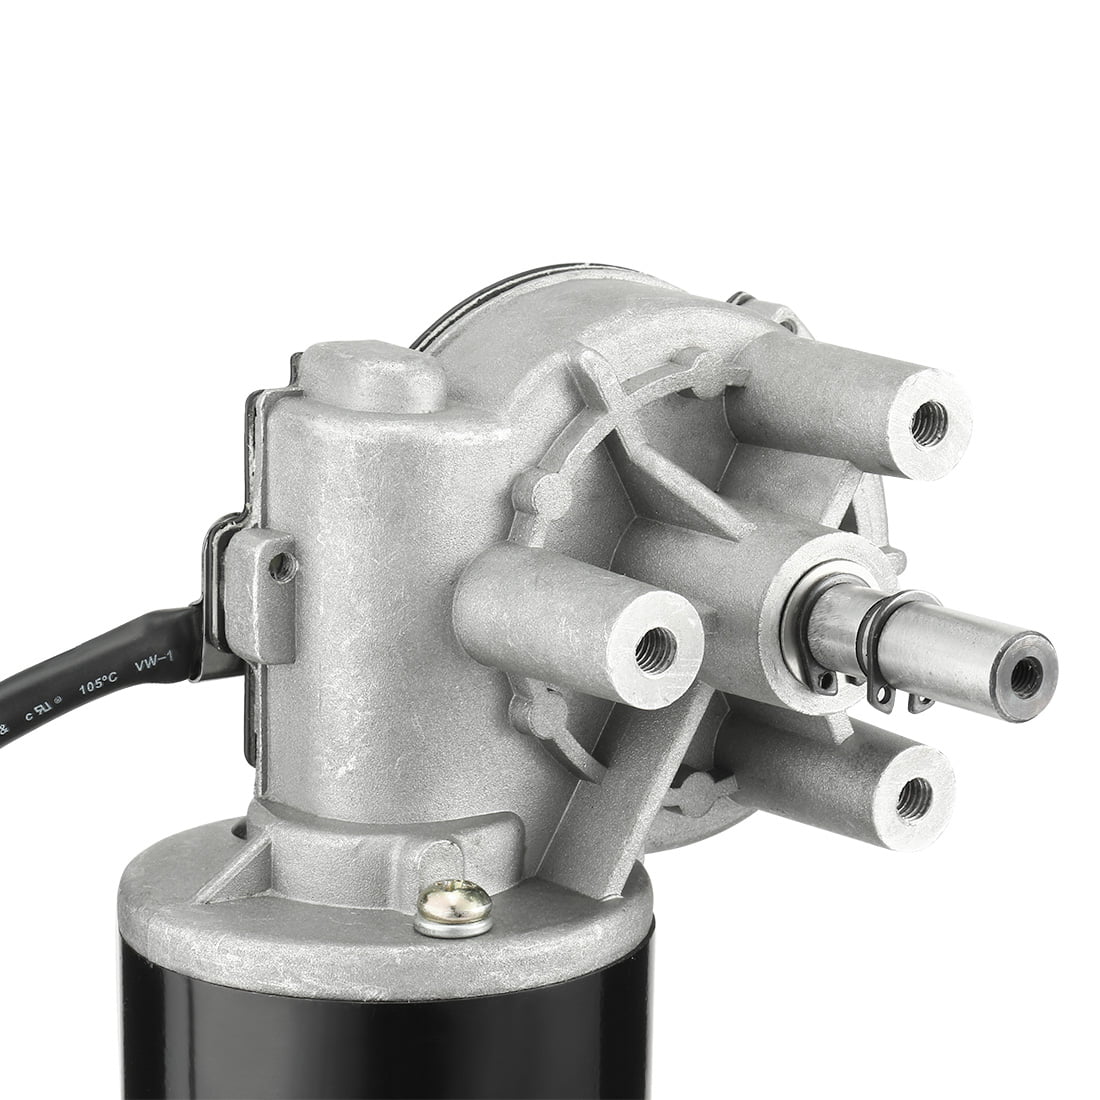 Jcf63l mini engranajes motor Micro Speed reducir engranajes motor dc 36v 80w 40rpm 